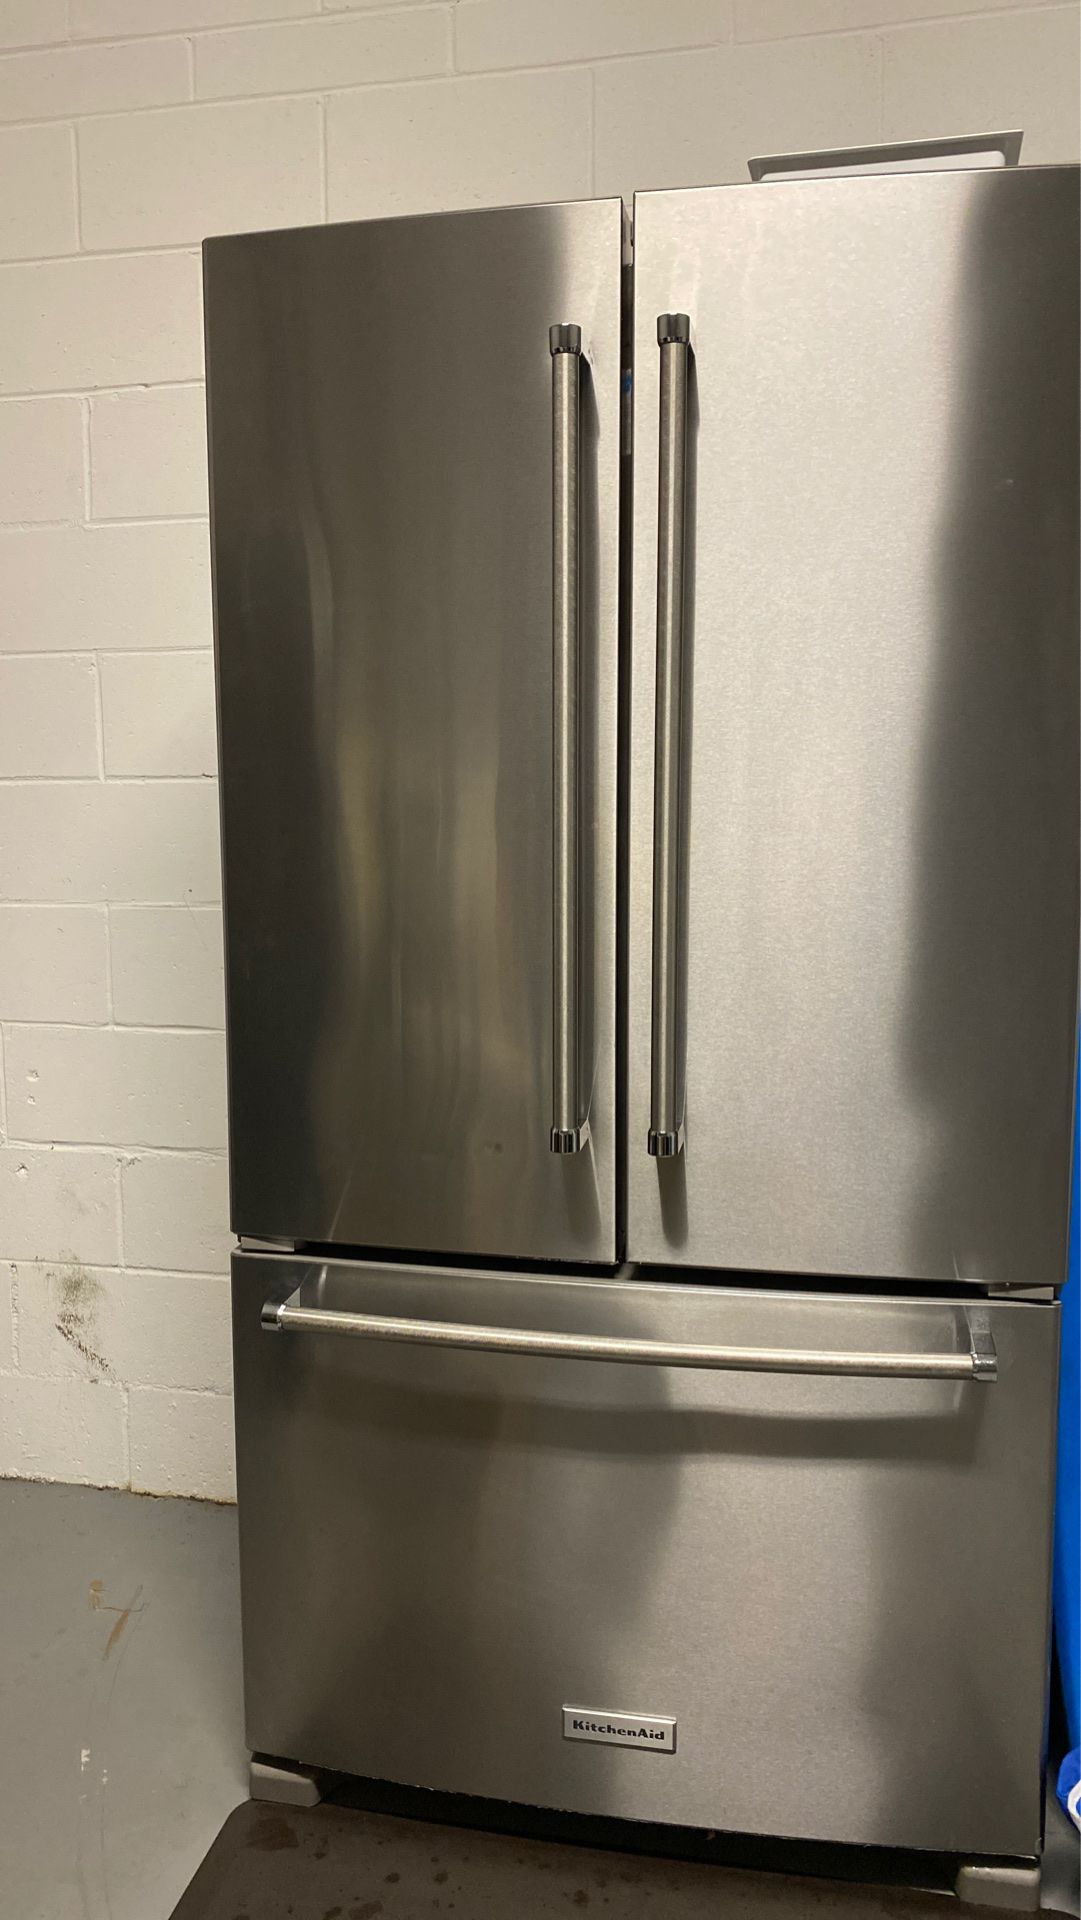 Kitchen aid fridge and freezer